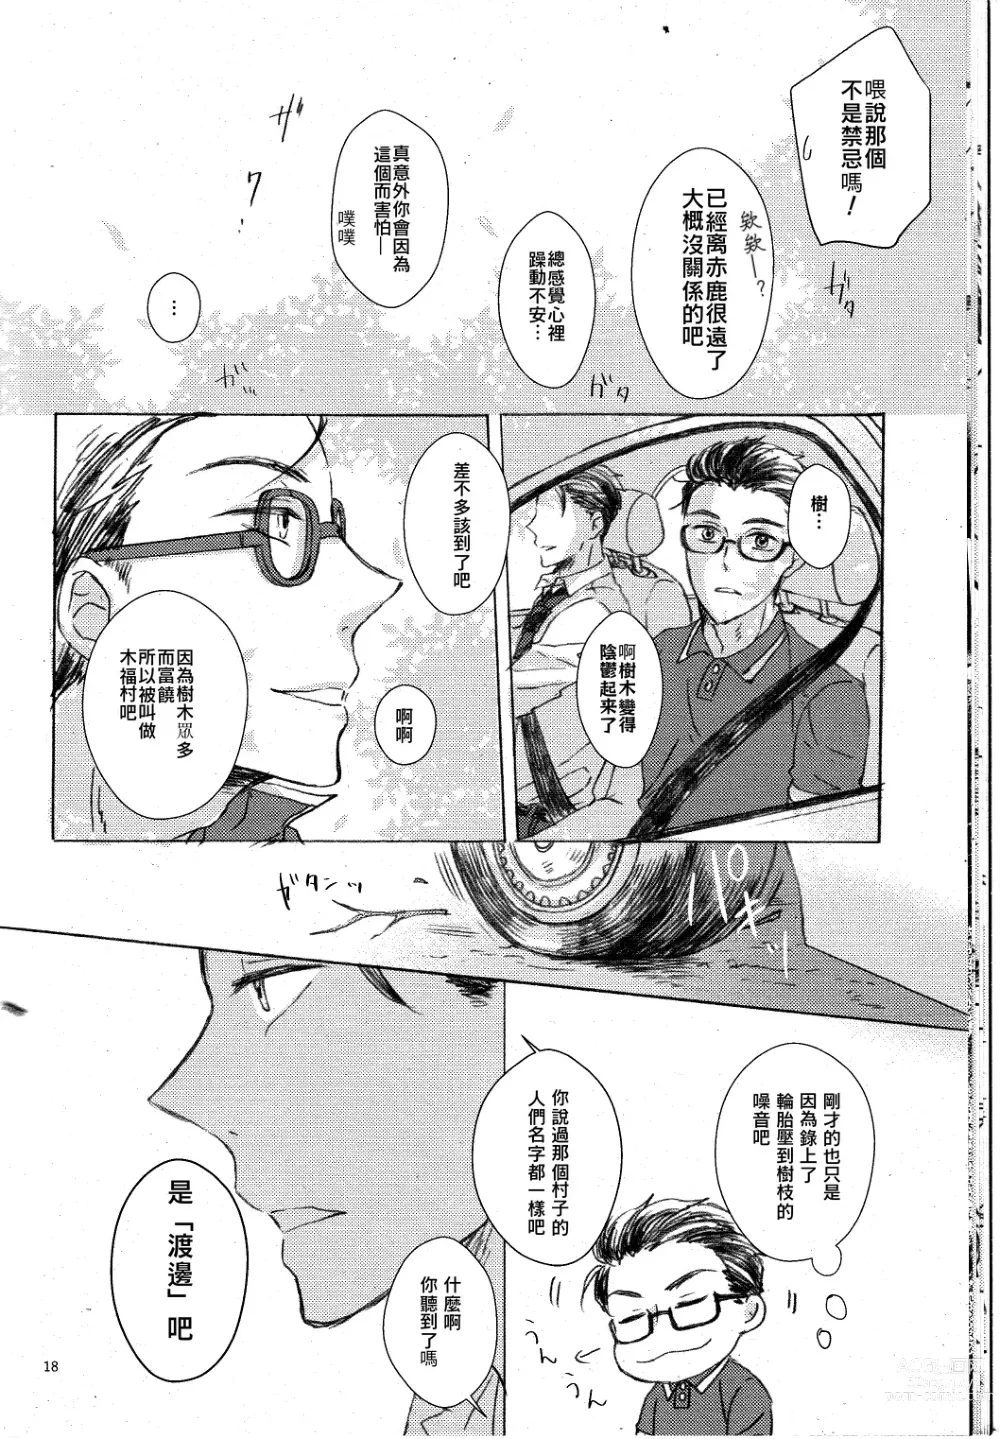 Page 16 of doujinshi Oni to Zaregoto